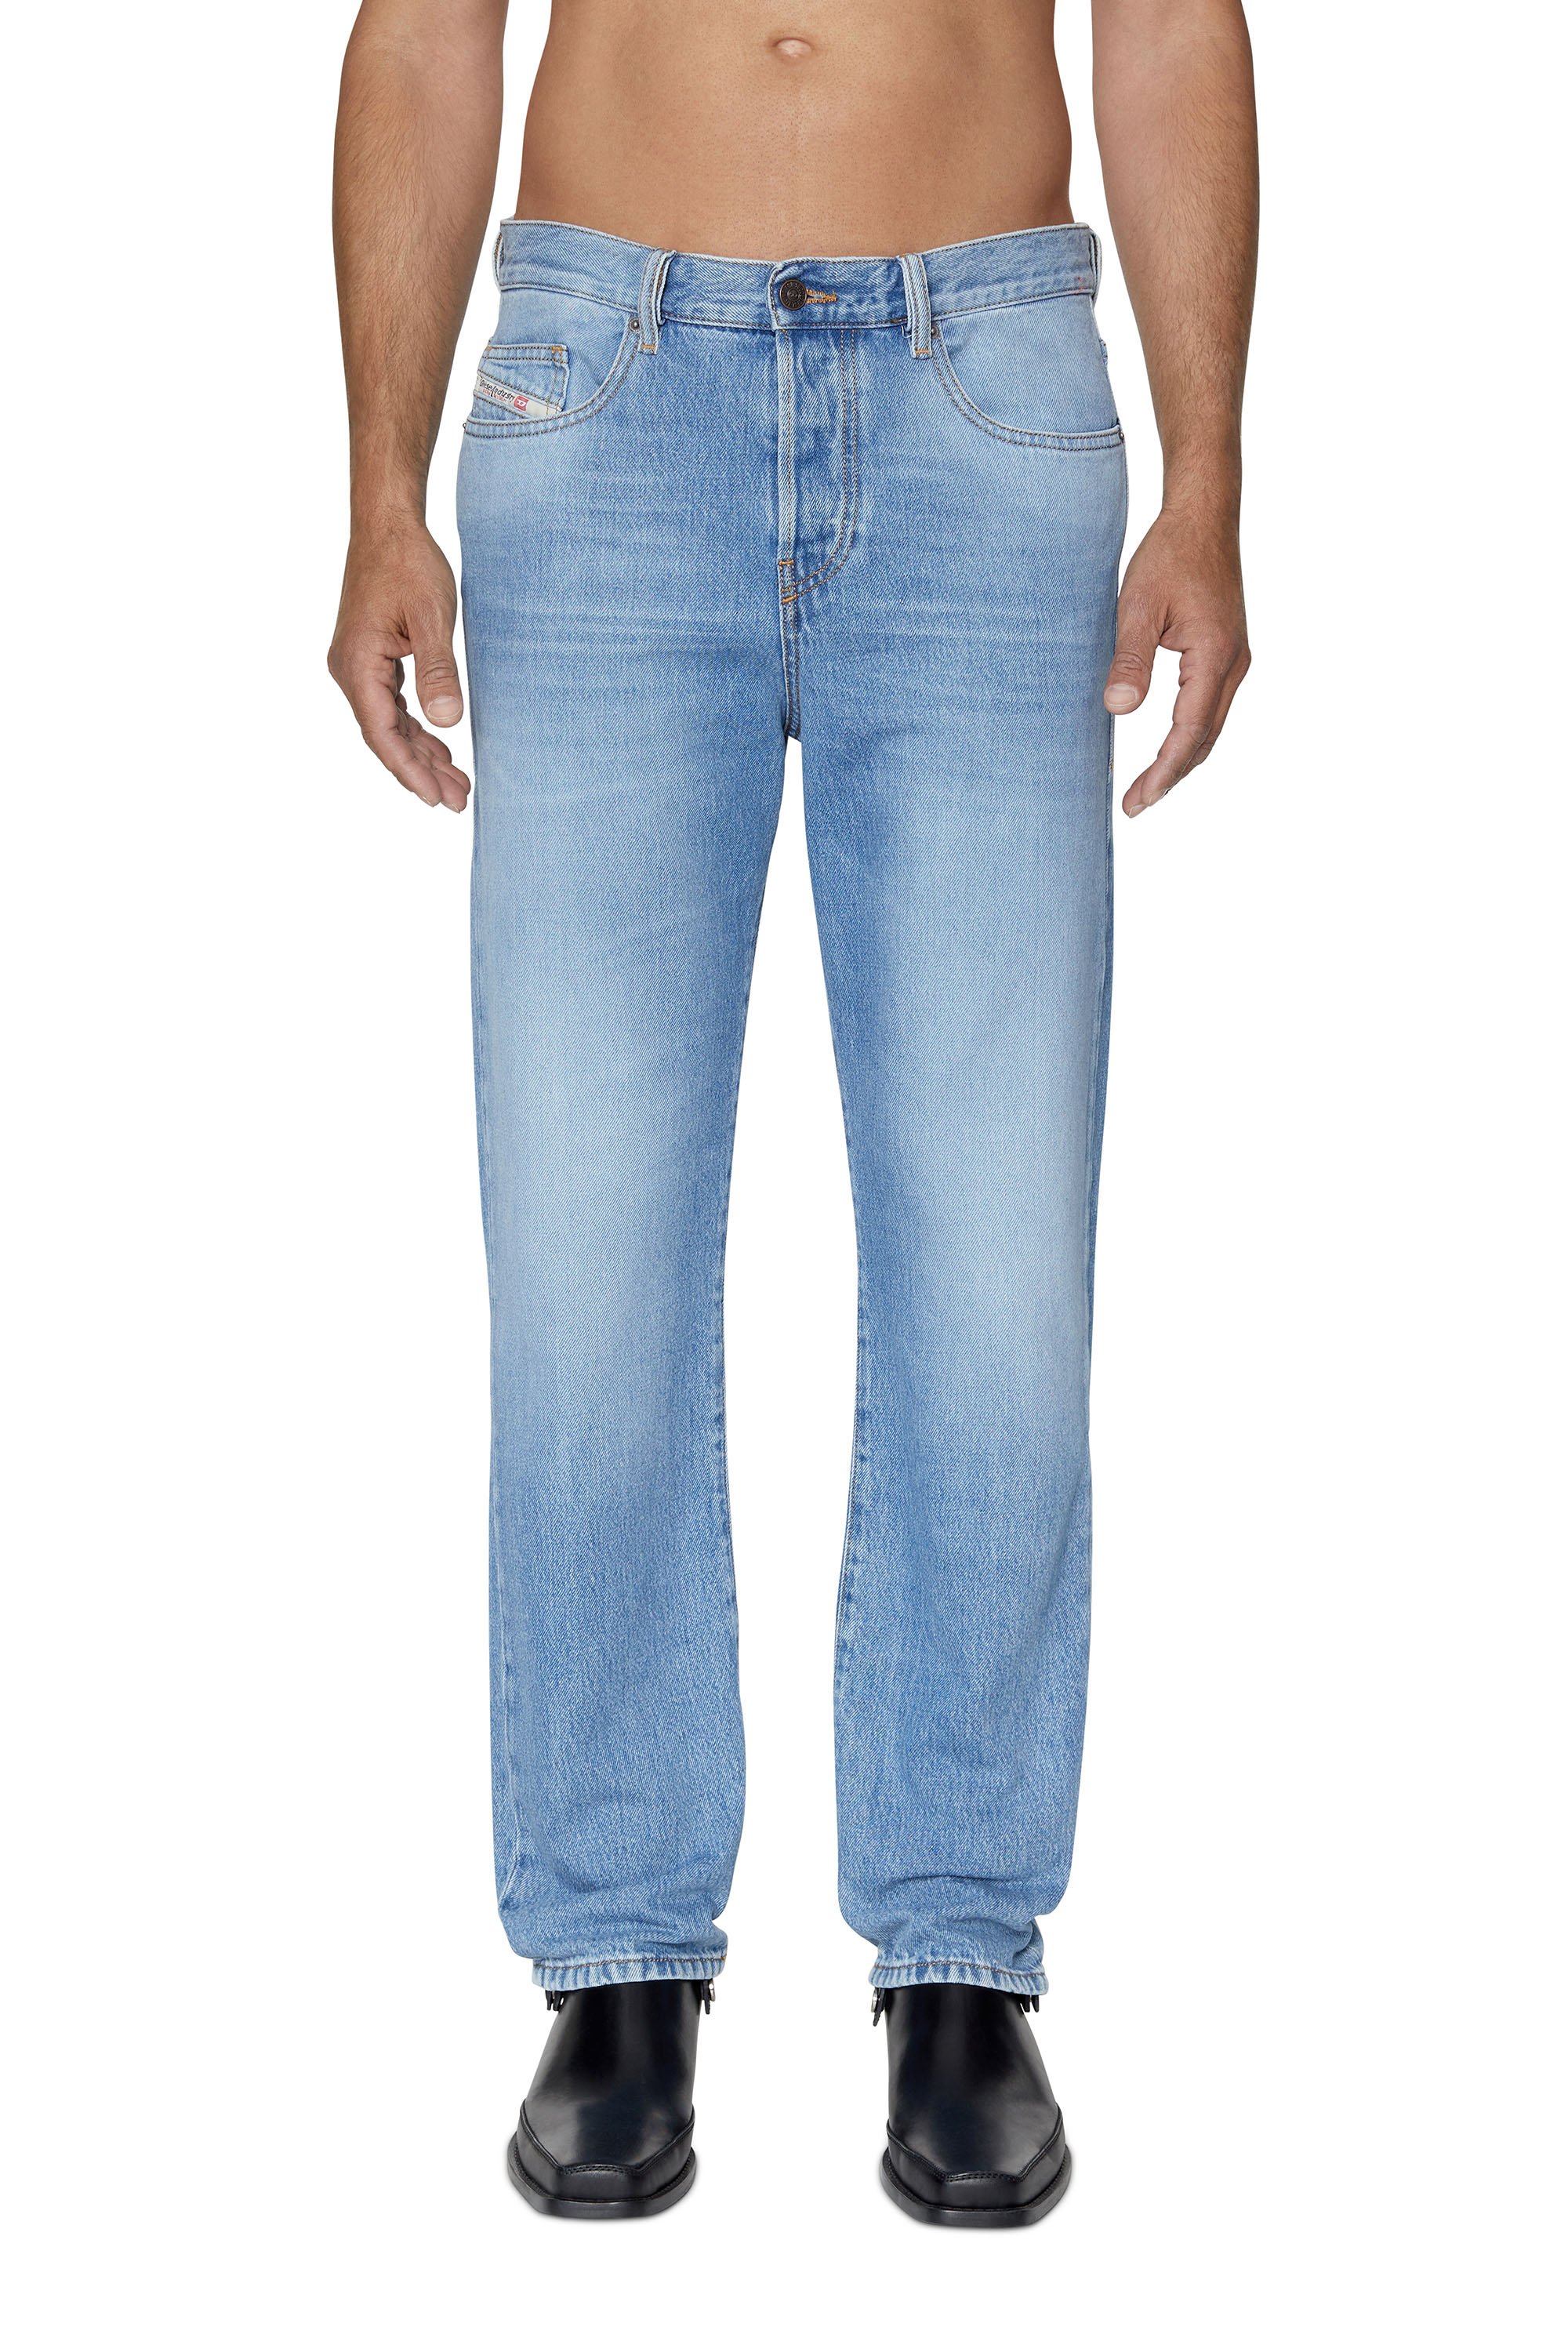 Men's Straight Jeans | Shop on Diesel.com